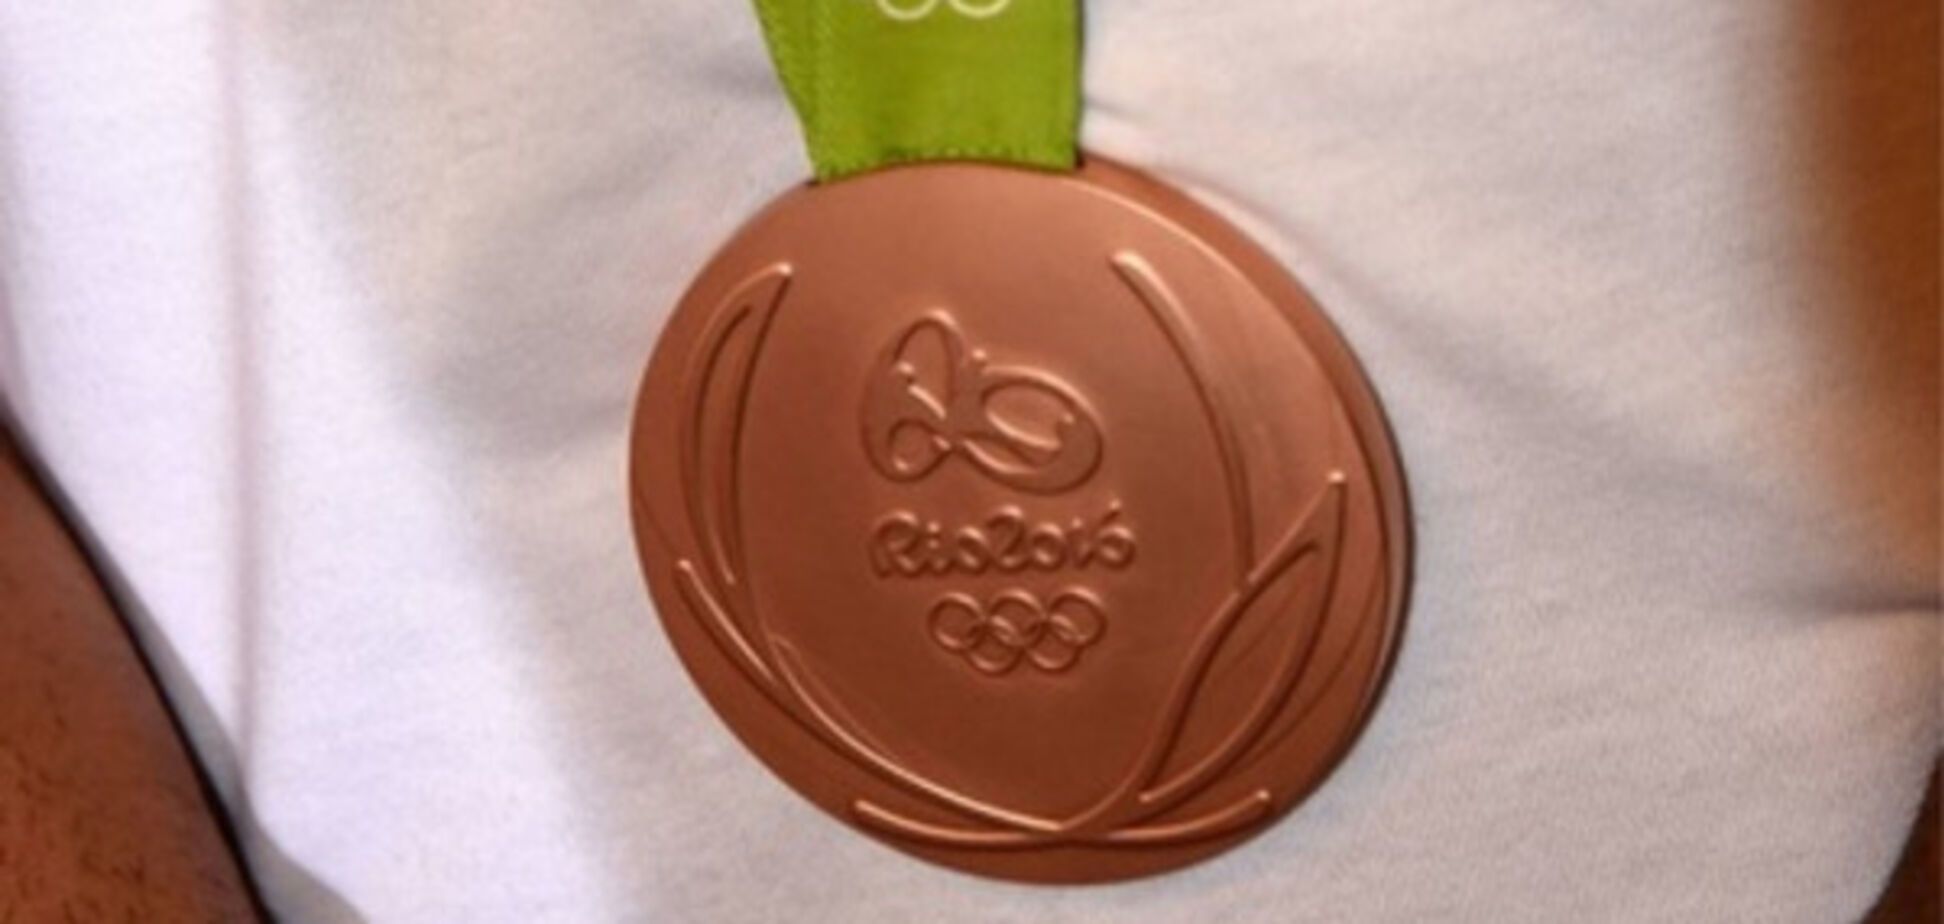 Медали Олимпиады